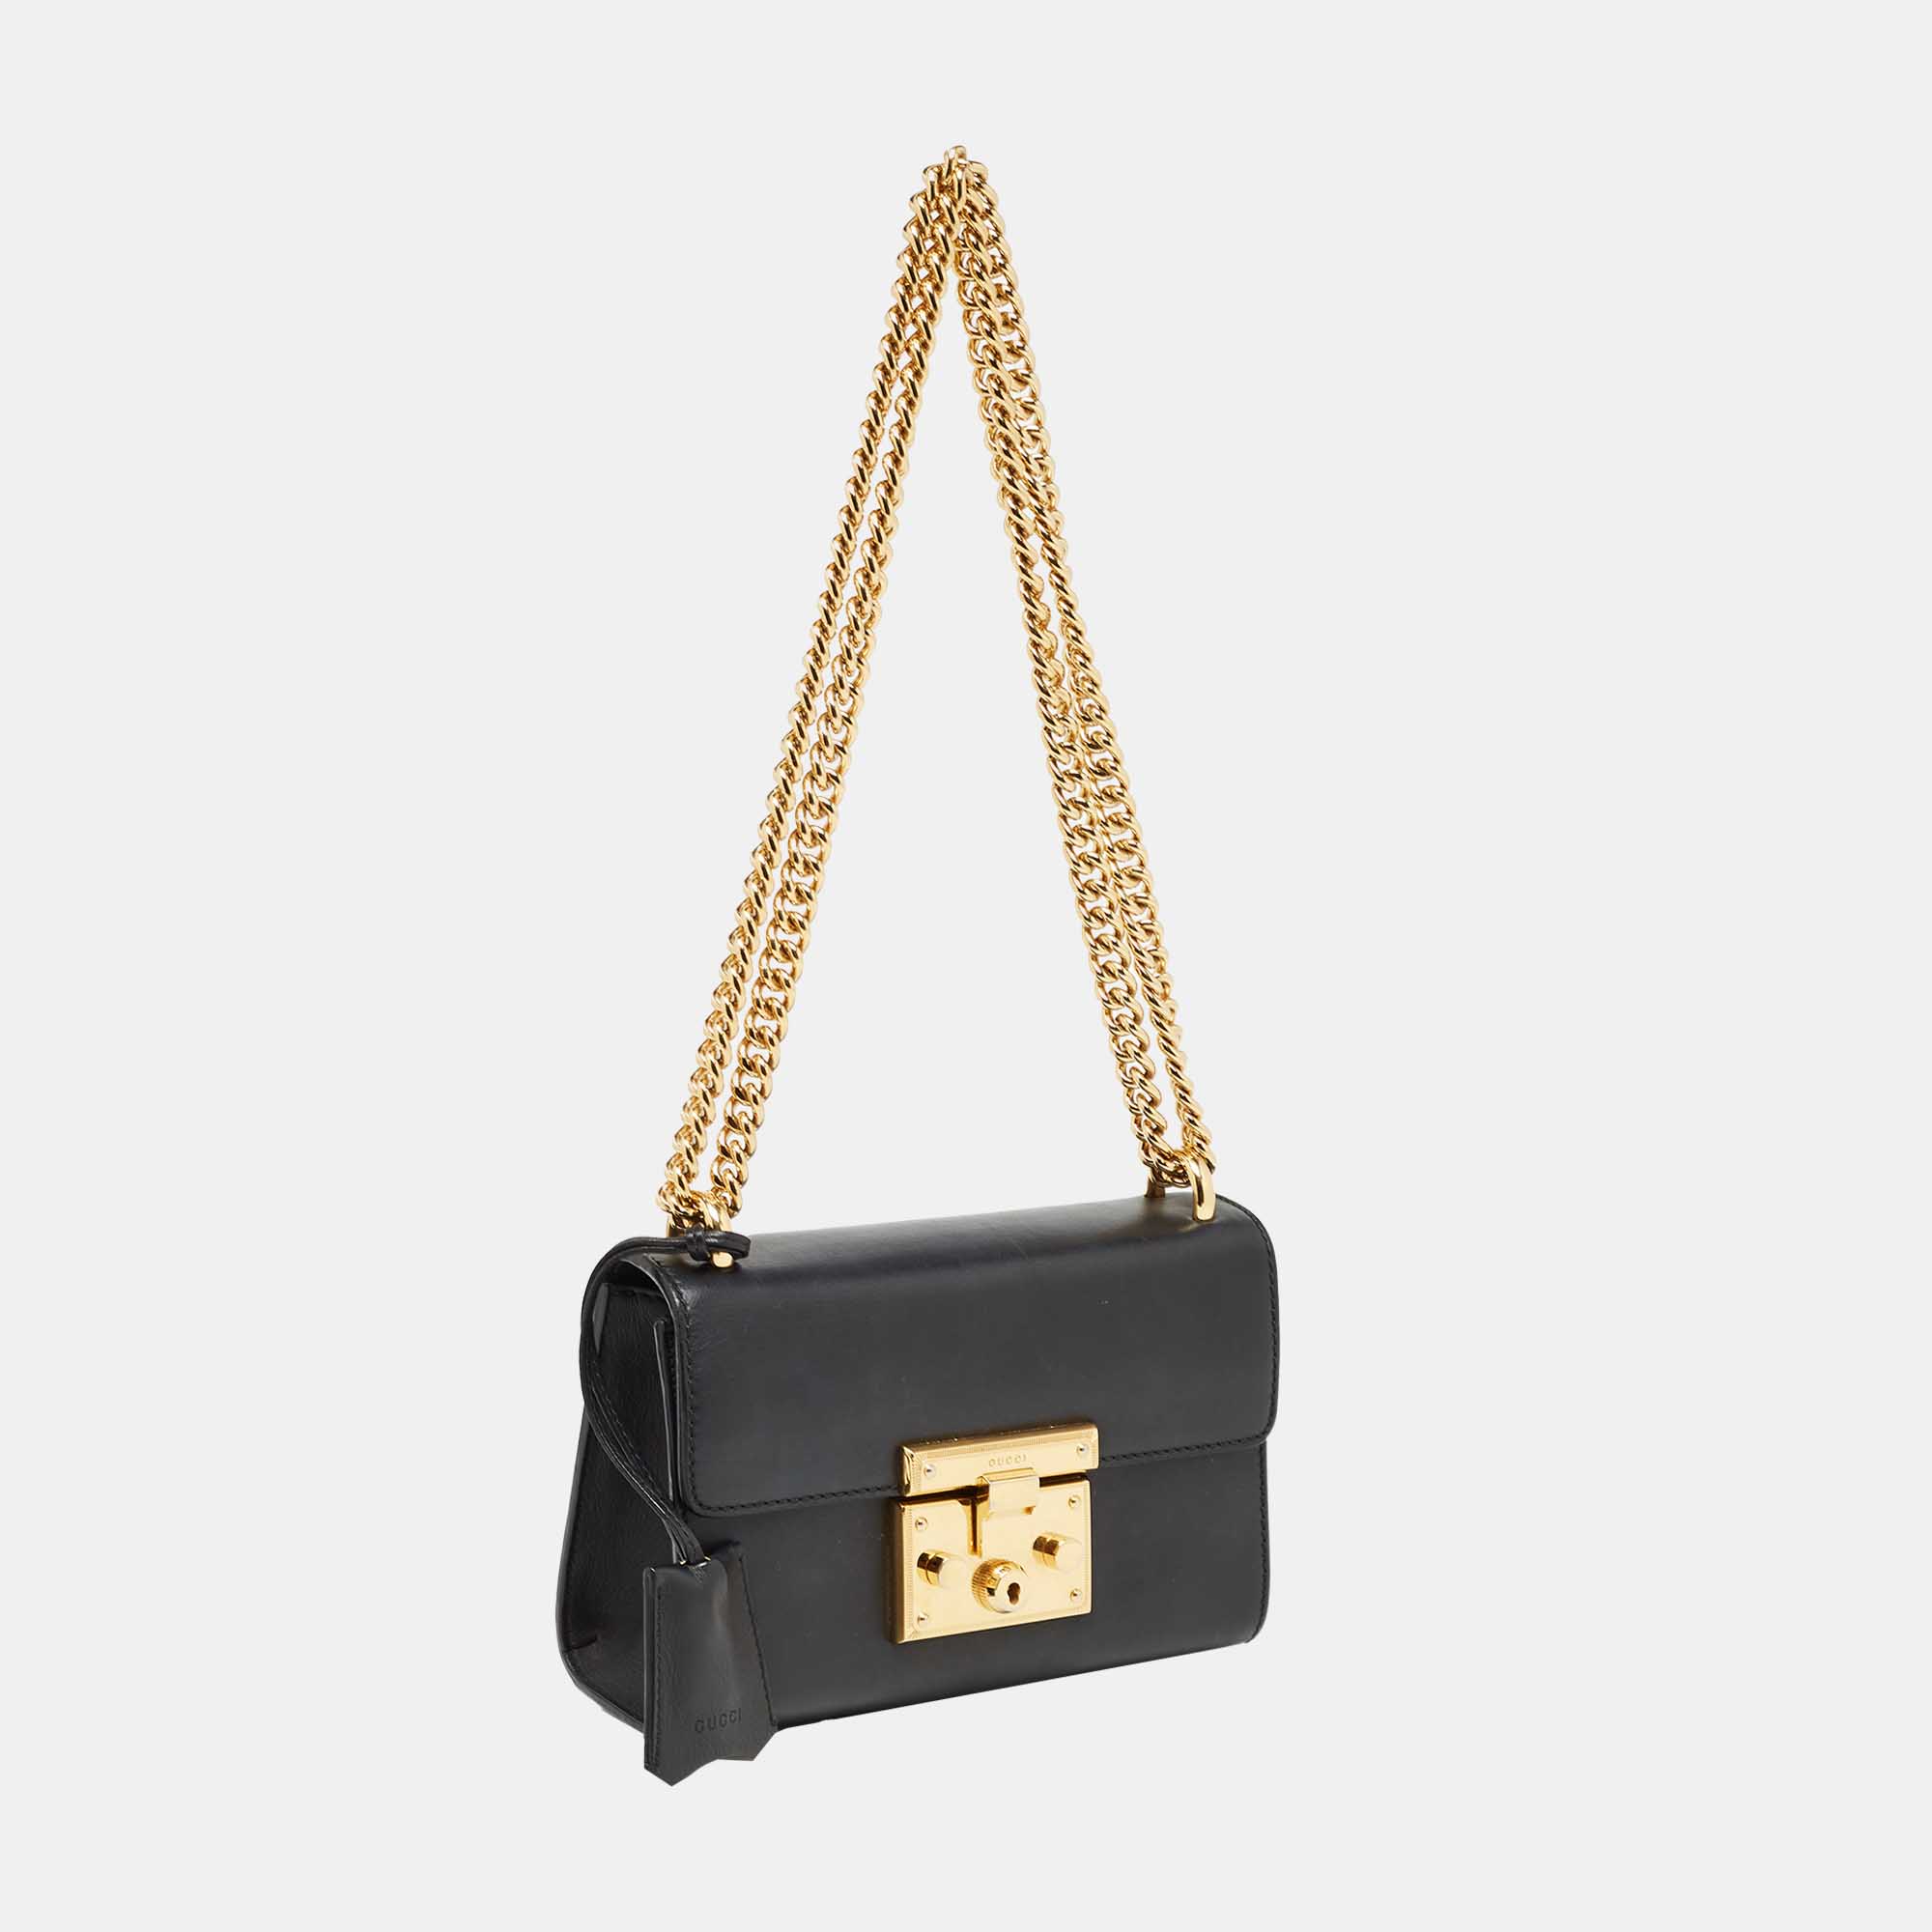 Gucci Black Leather Small Padlock Shoulder Bag